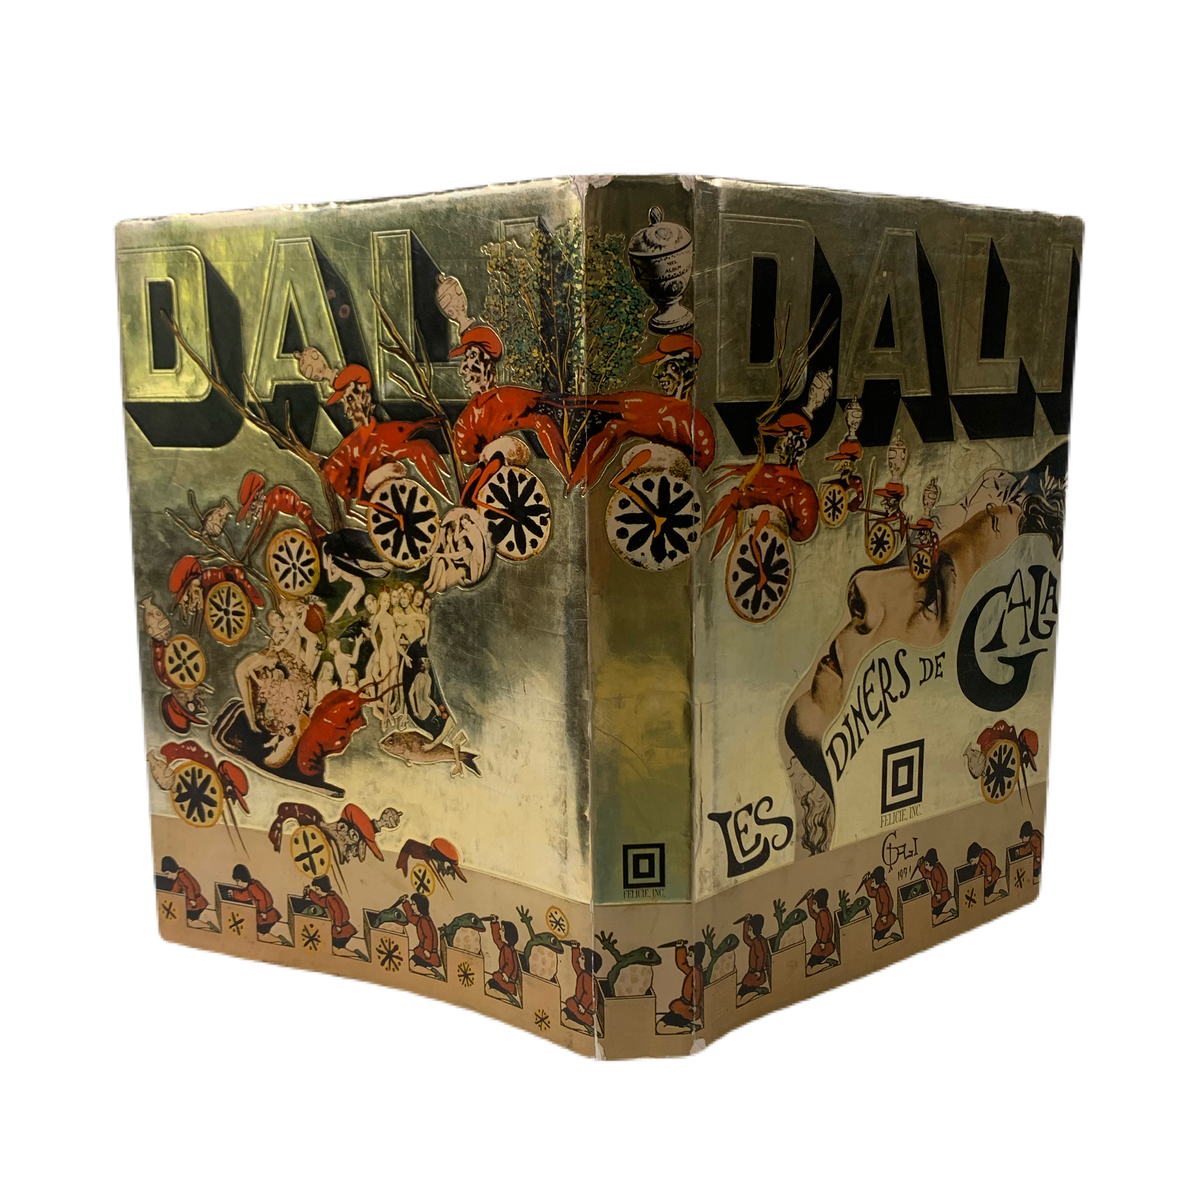 Vintage Salvador Dalí “Les Diners De Gala” First US Edition Book